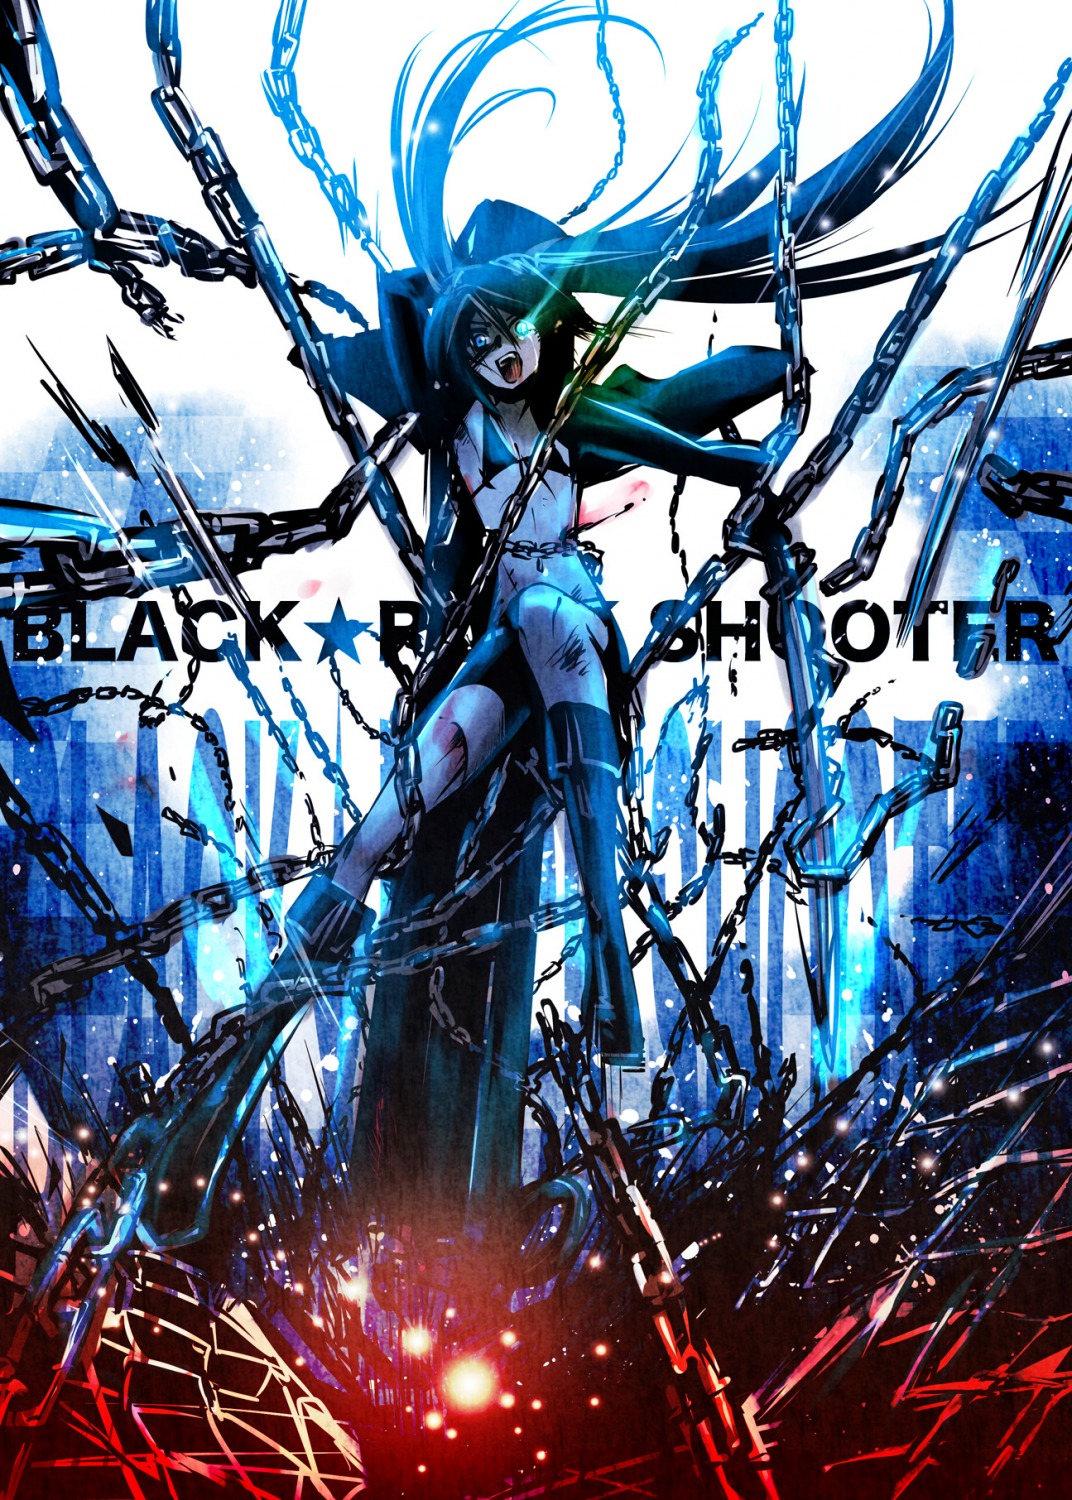 black_rock_shooter black_rock_shooter_(character) działo